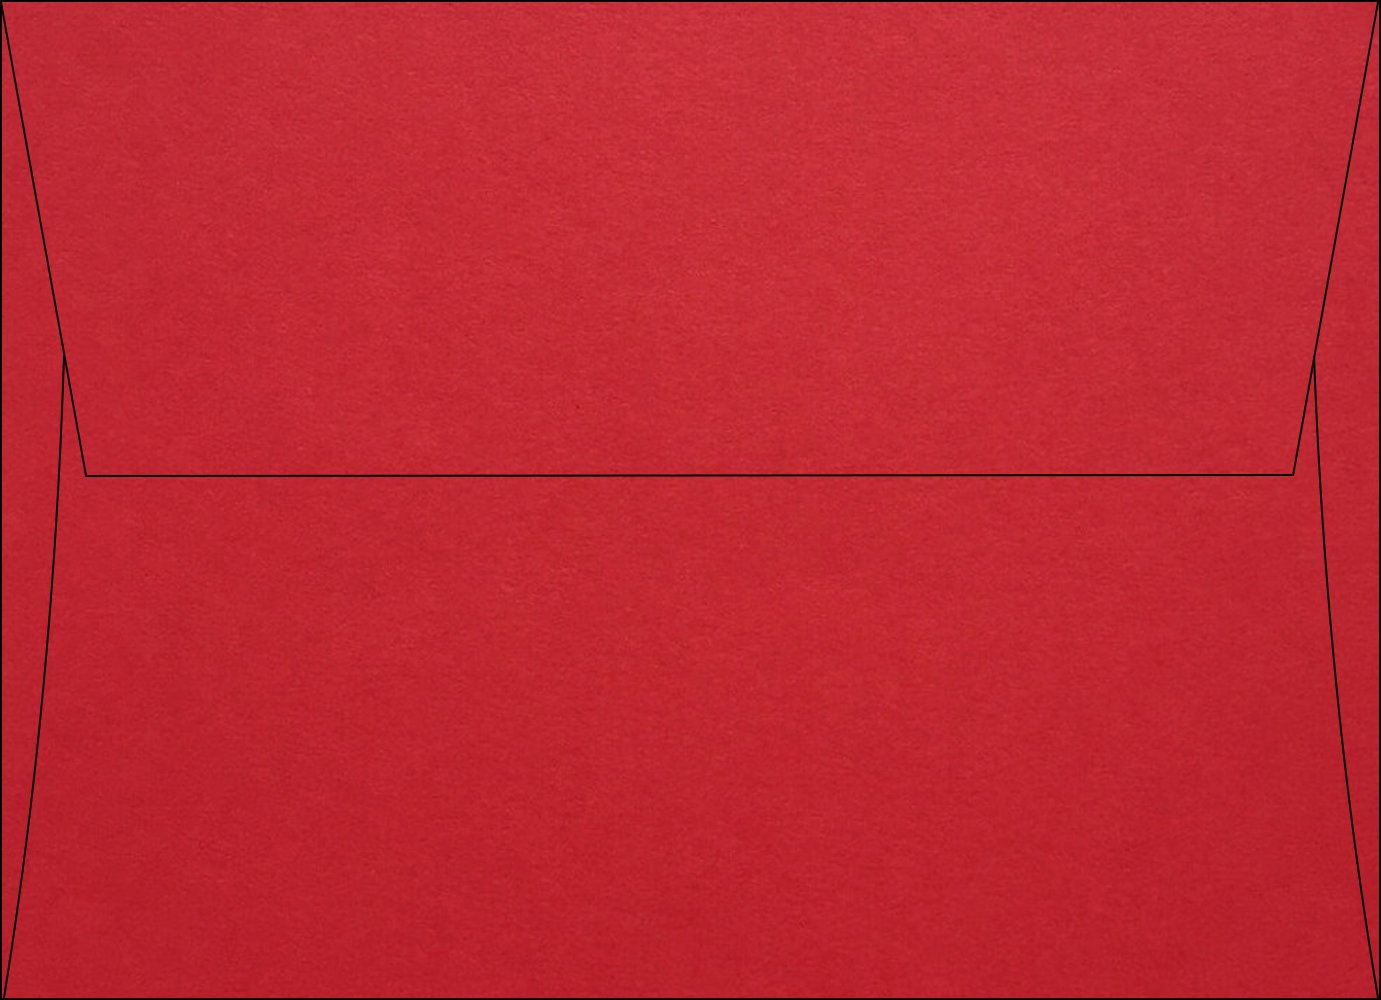  Red Hot | Pop-Tone Square Flap Envelopes 